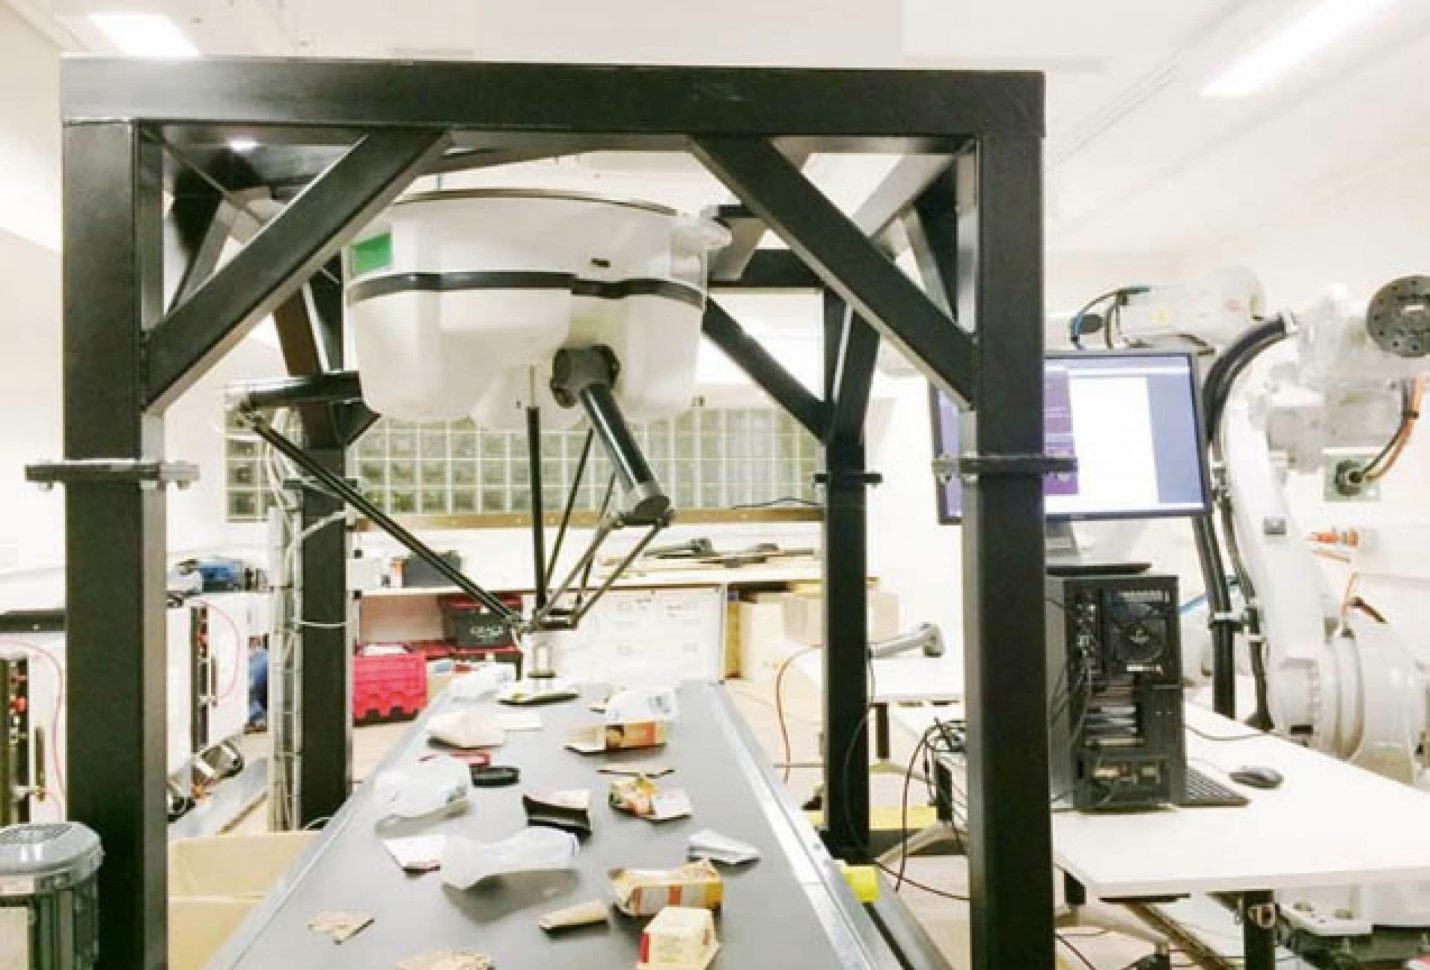 Sydney university develops smart robotic system to sort recyclable waste